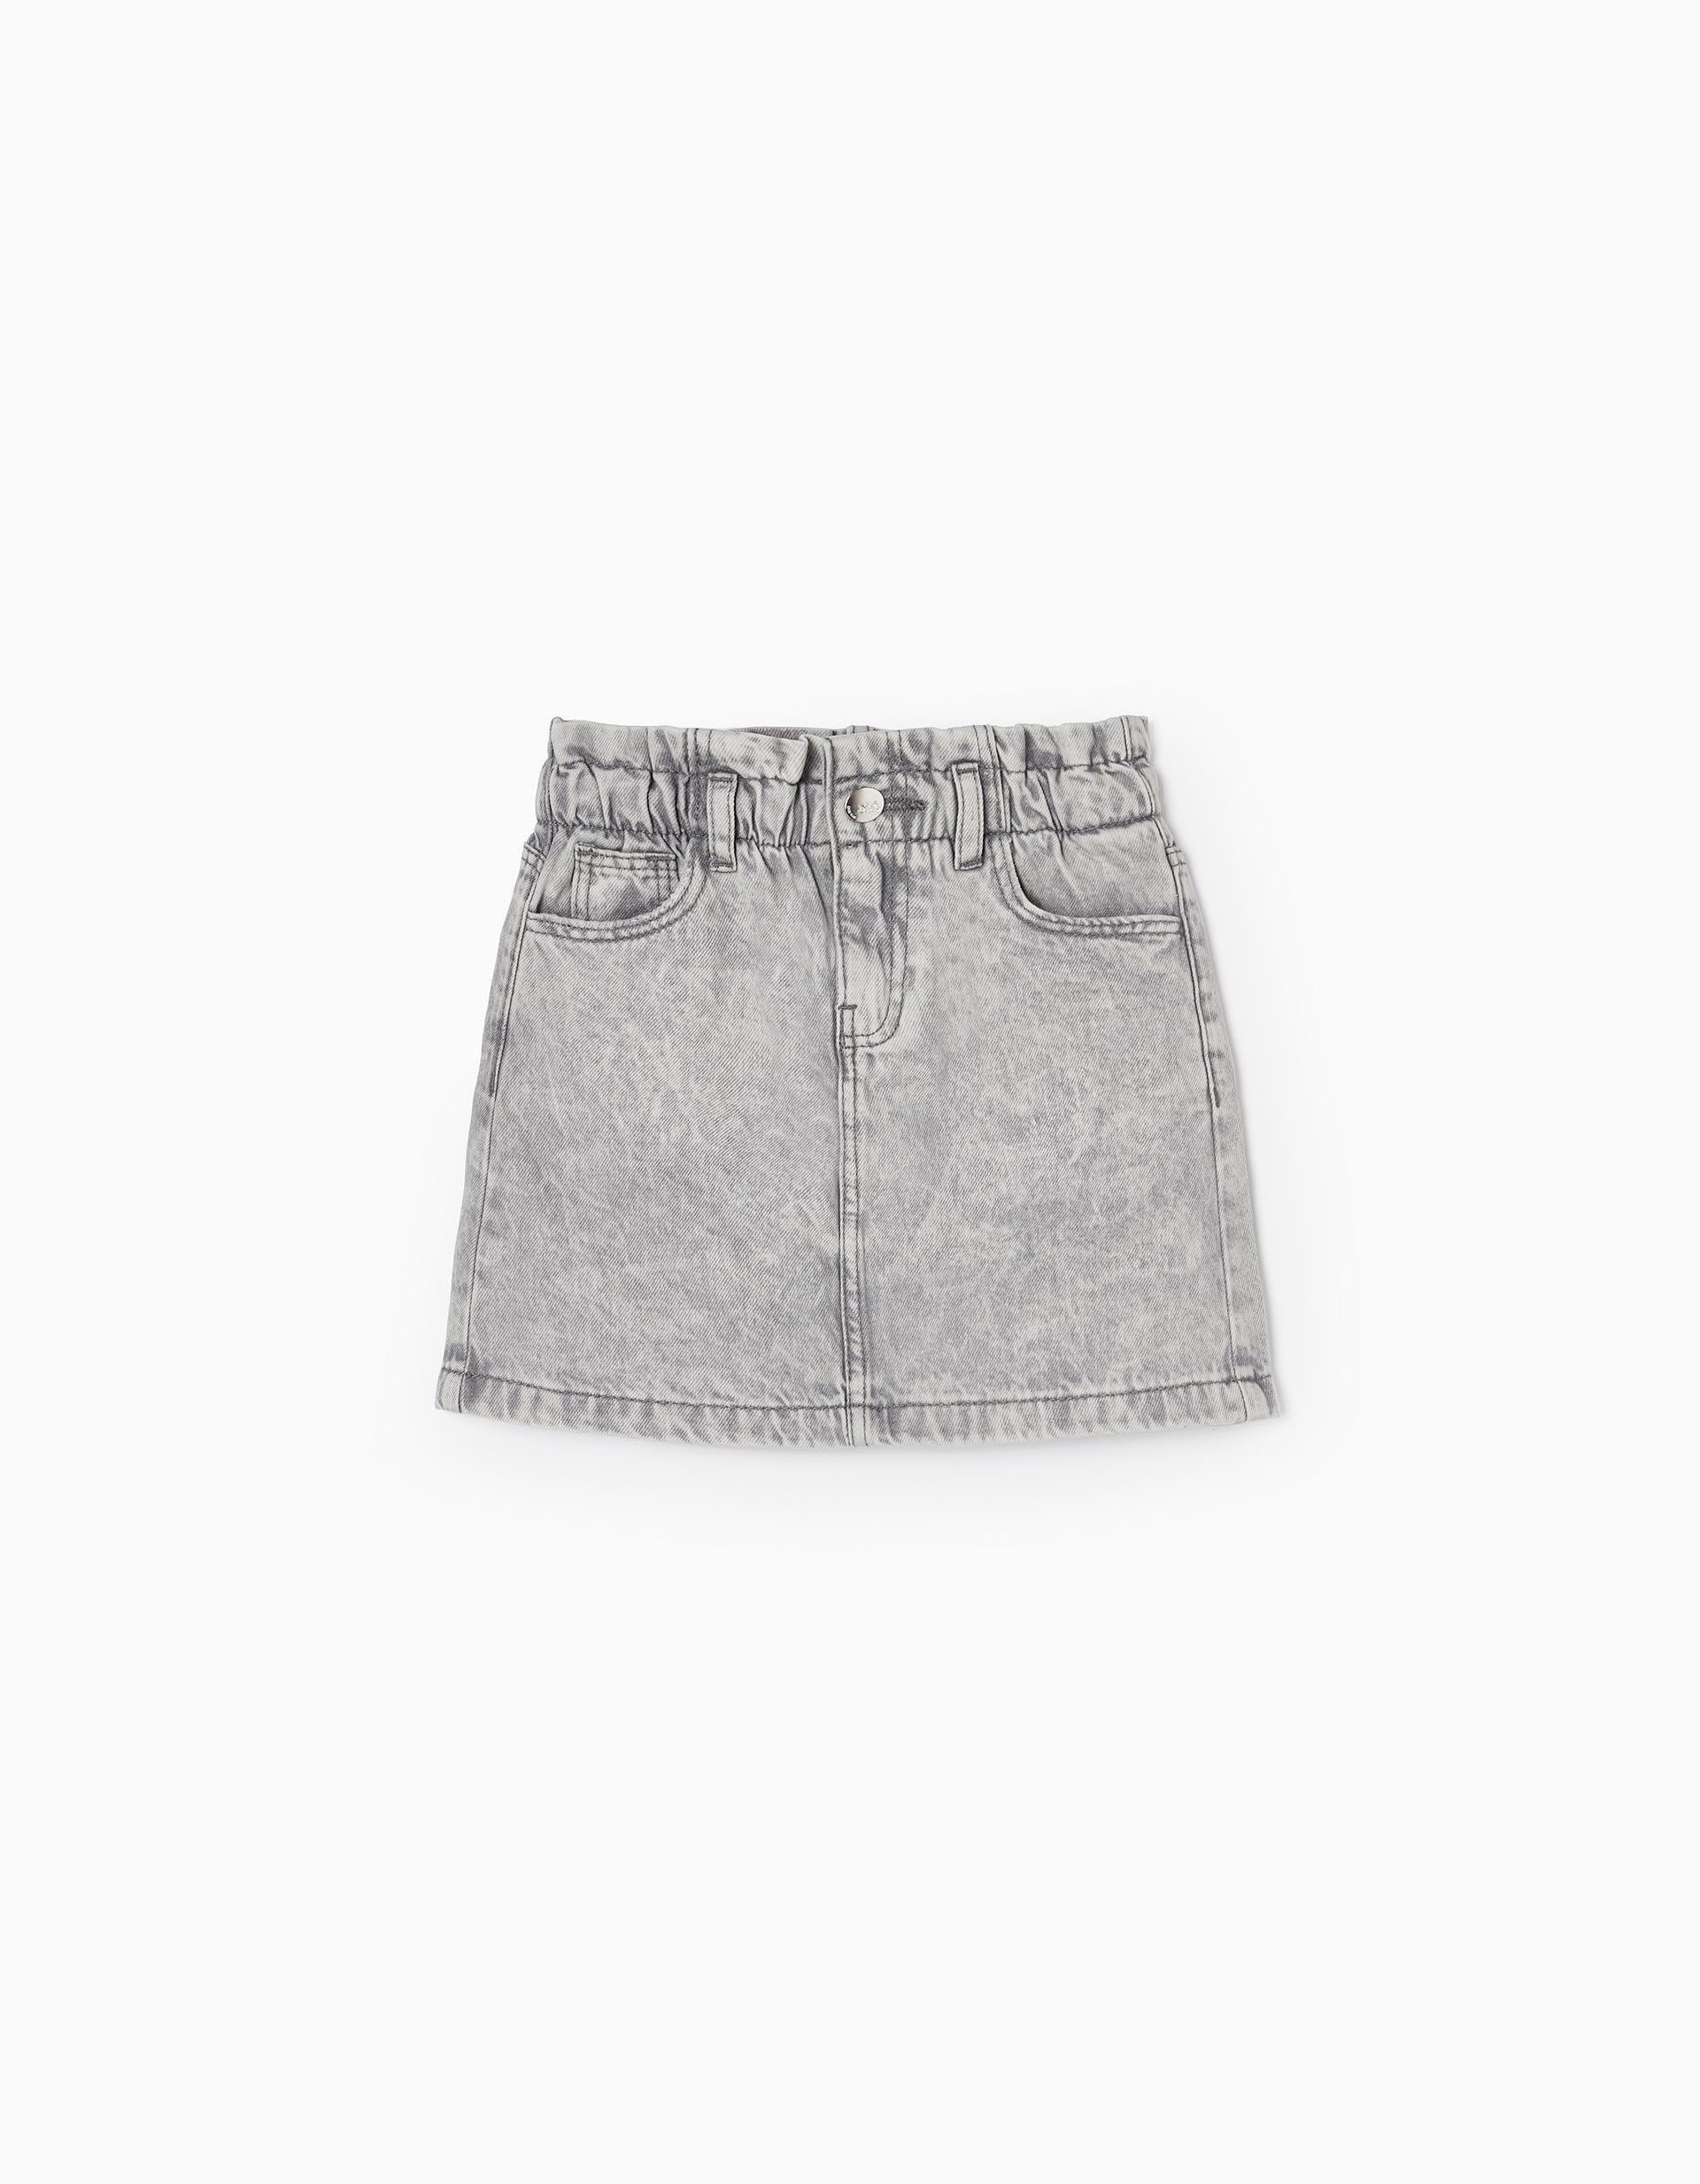 Zippy - Grey Paperbag Denim Skirt, Kids Girls